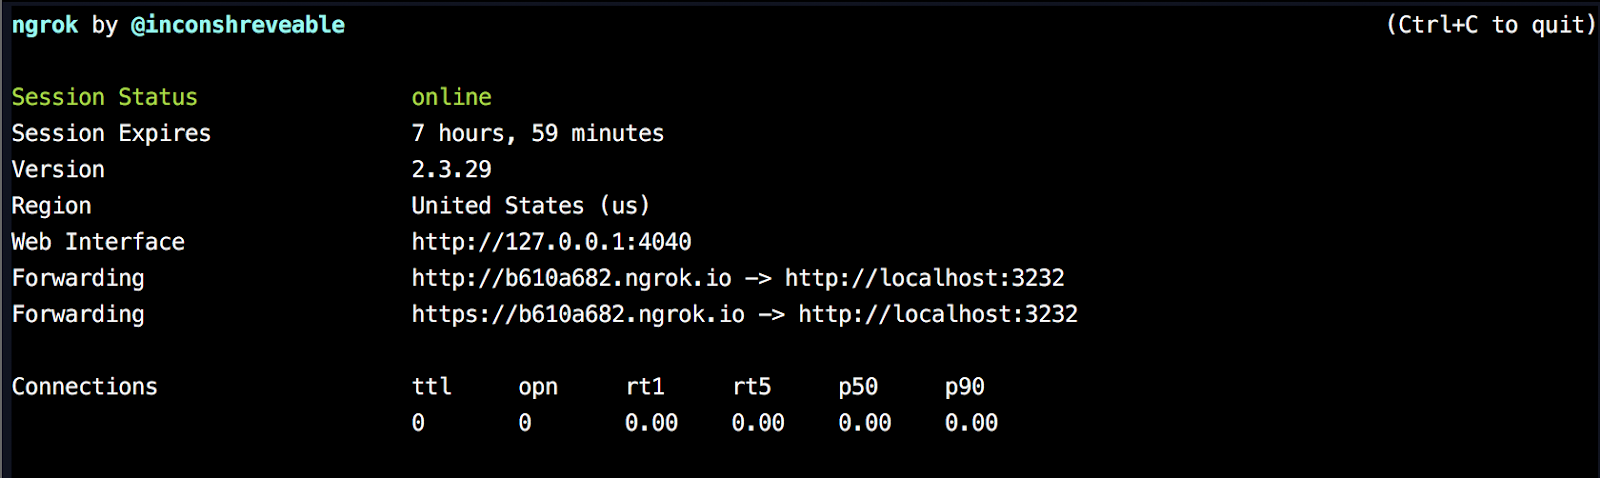 ngrok command line interface status information showing port forwarding URLs